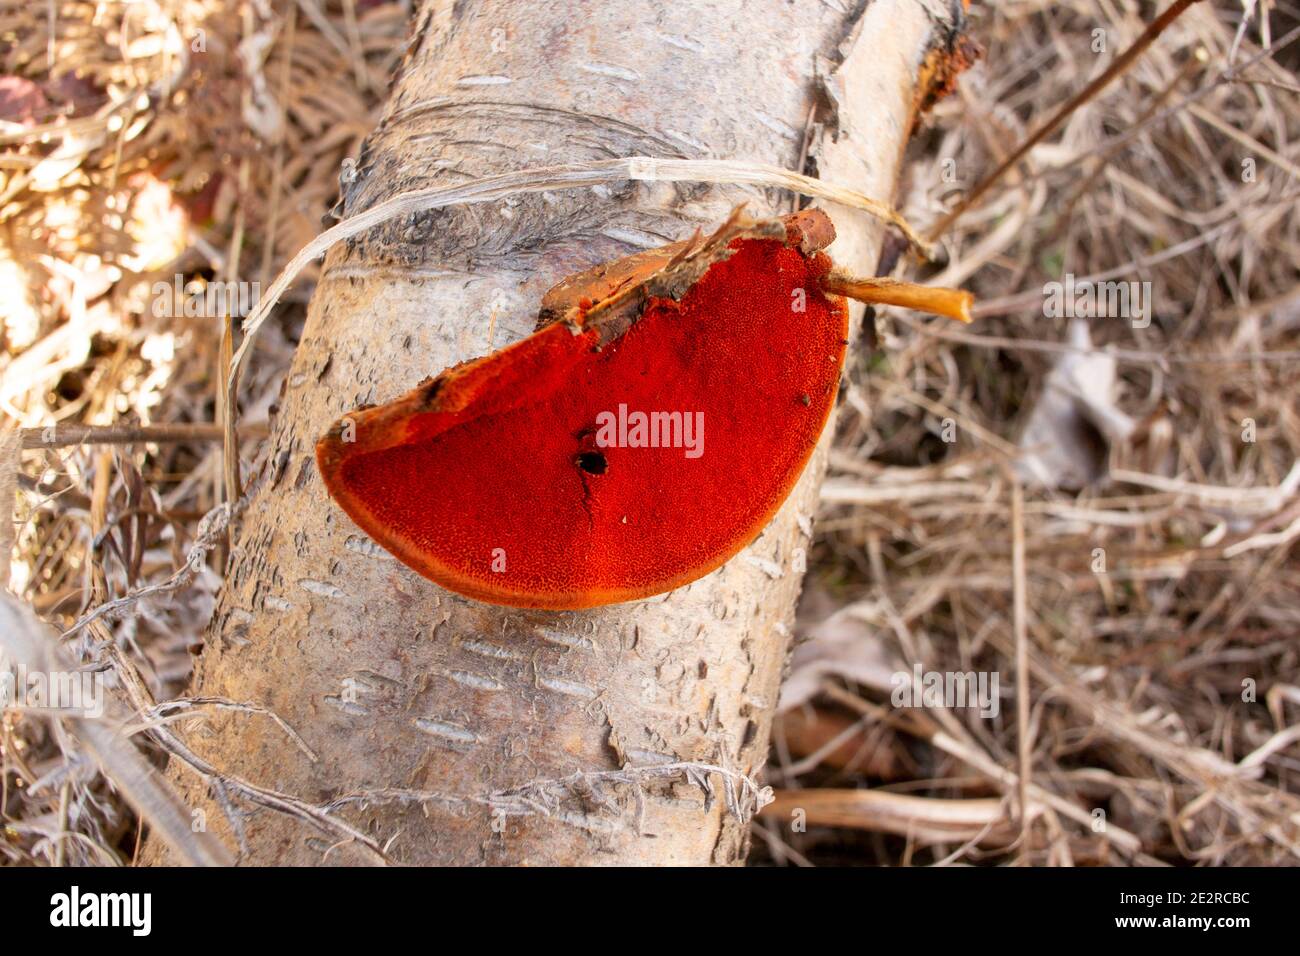 Cinnabar polypore mushroom (Pycnoporus cinnabarinus) on a fallen red birch log (Betula occidentalis), showing the bright red/orange pores. Stock Photo